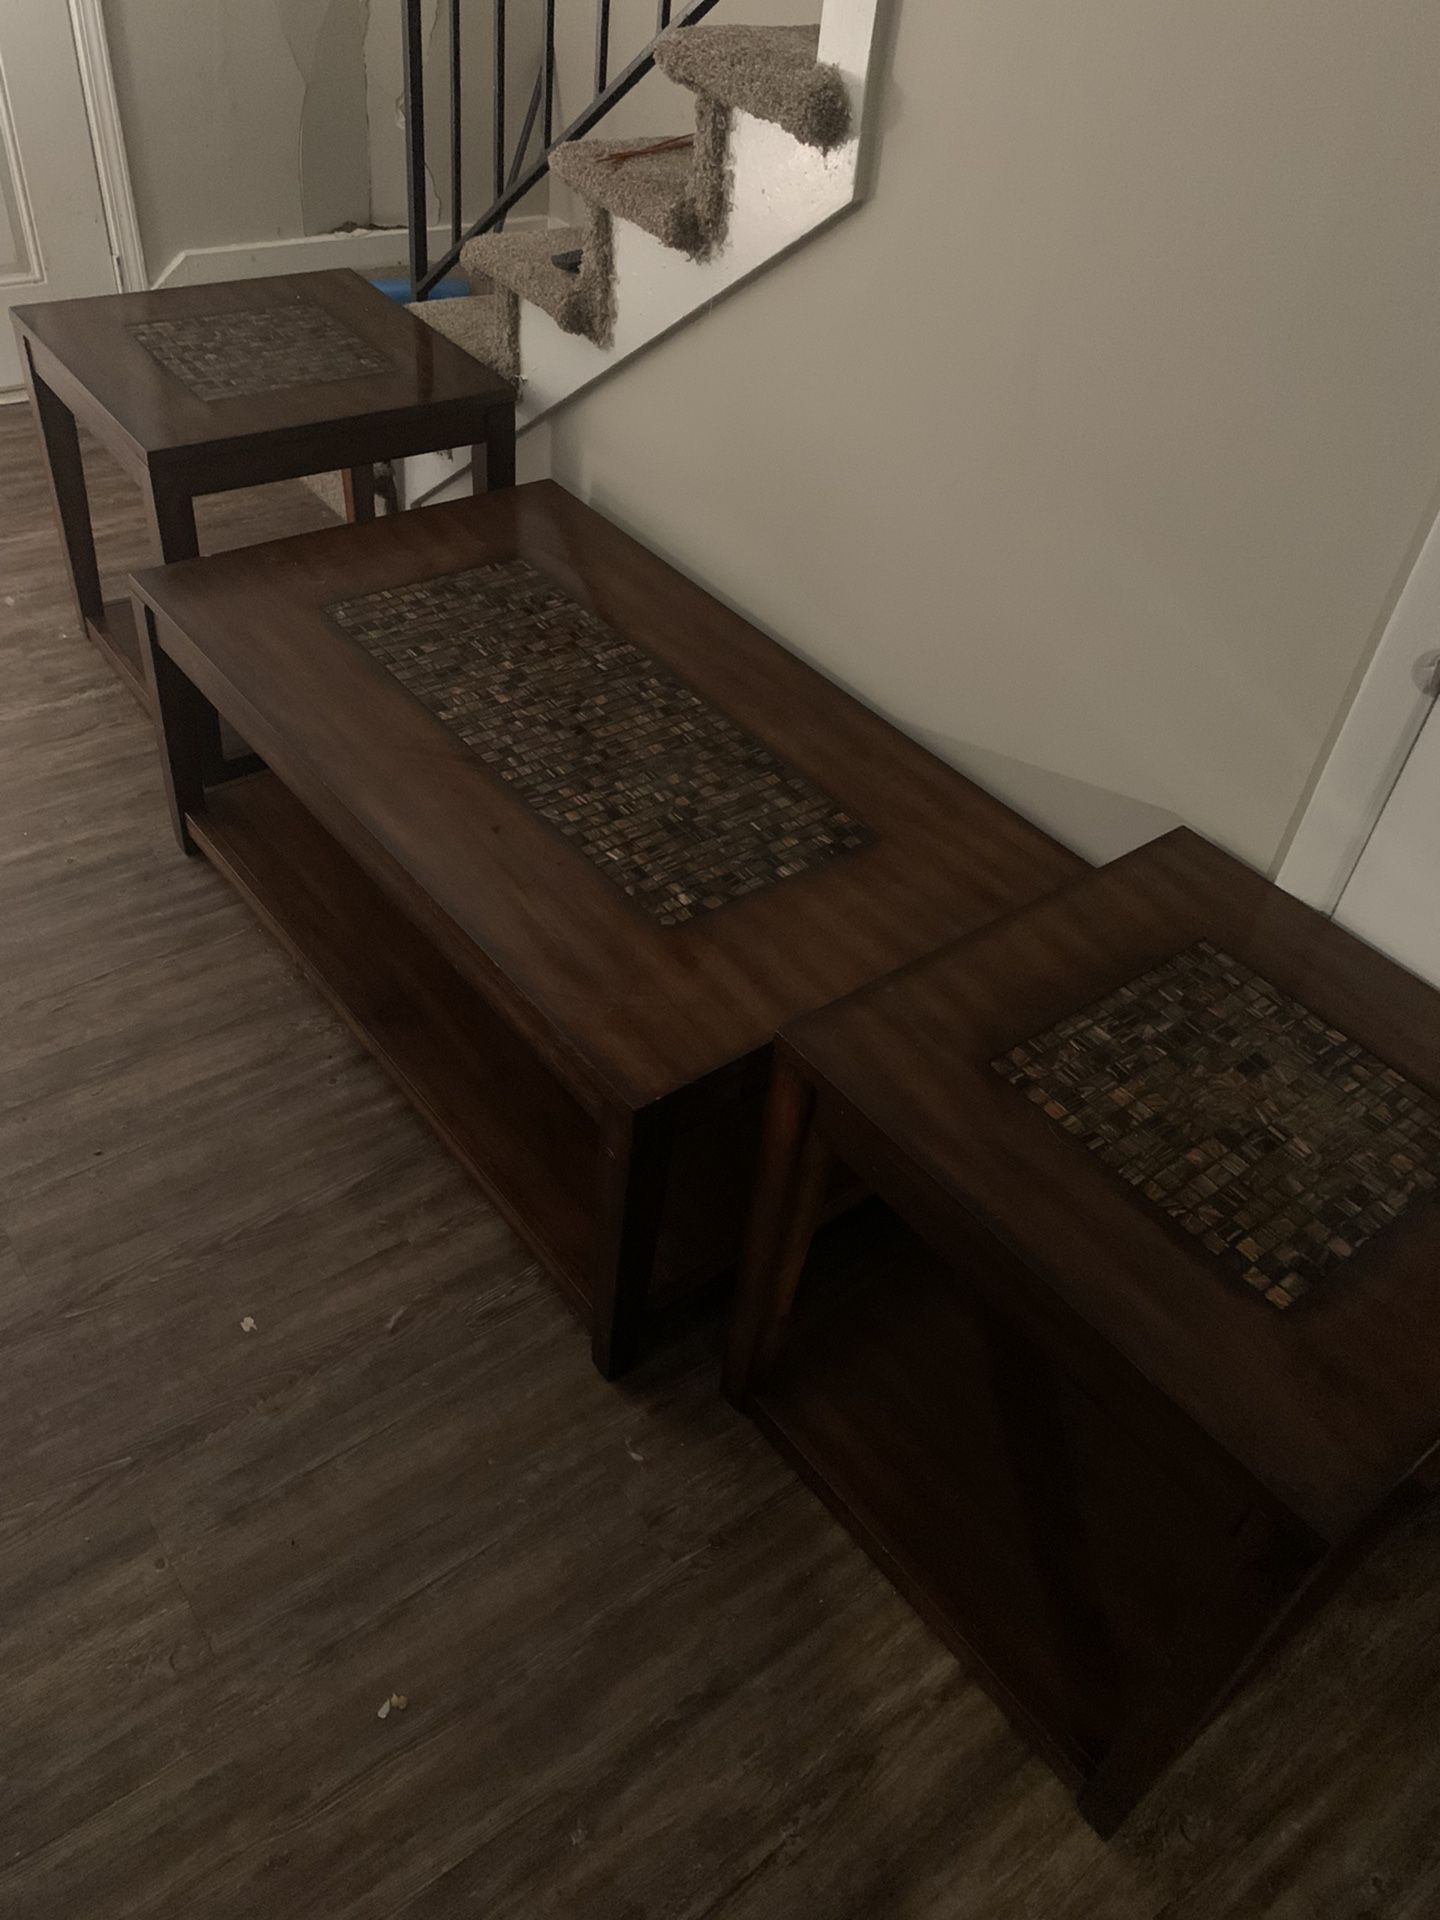 Living Room Table Set